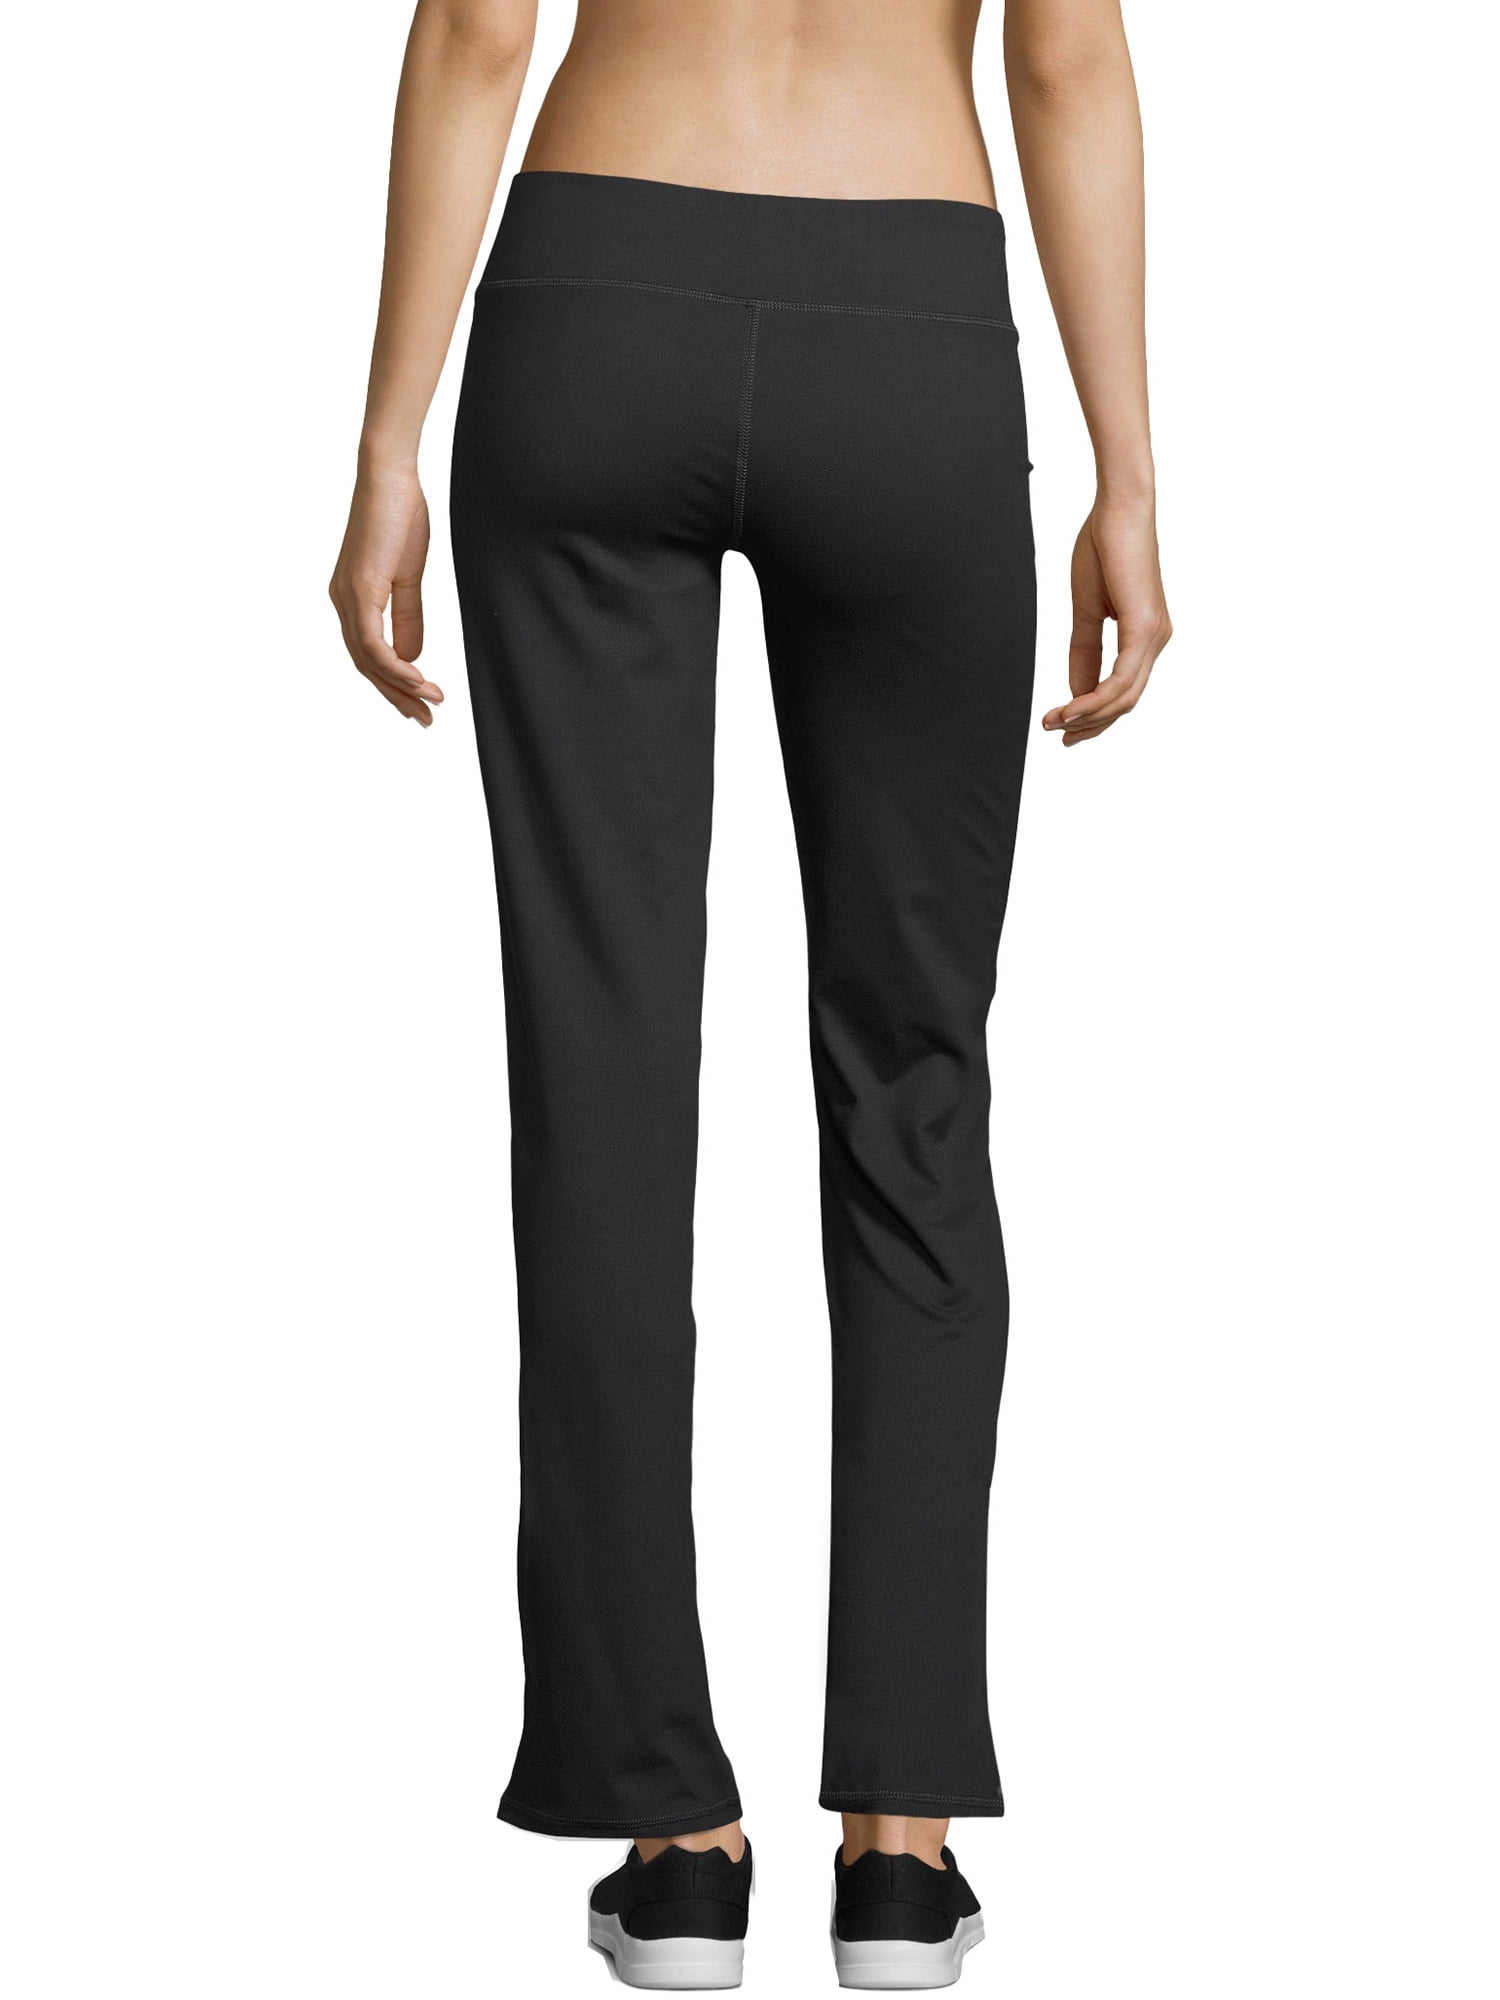 QTY 2) HANES Stylessentials Mid-Rise Yoga Pants Size M 8-10 Black